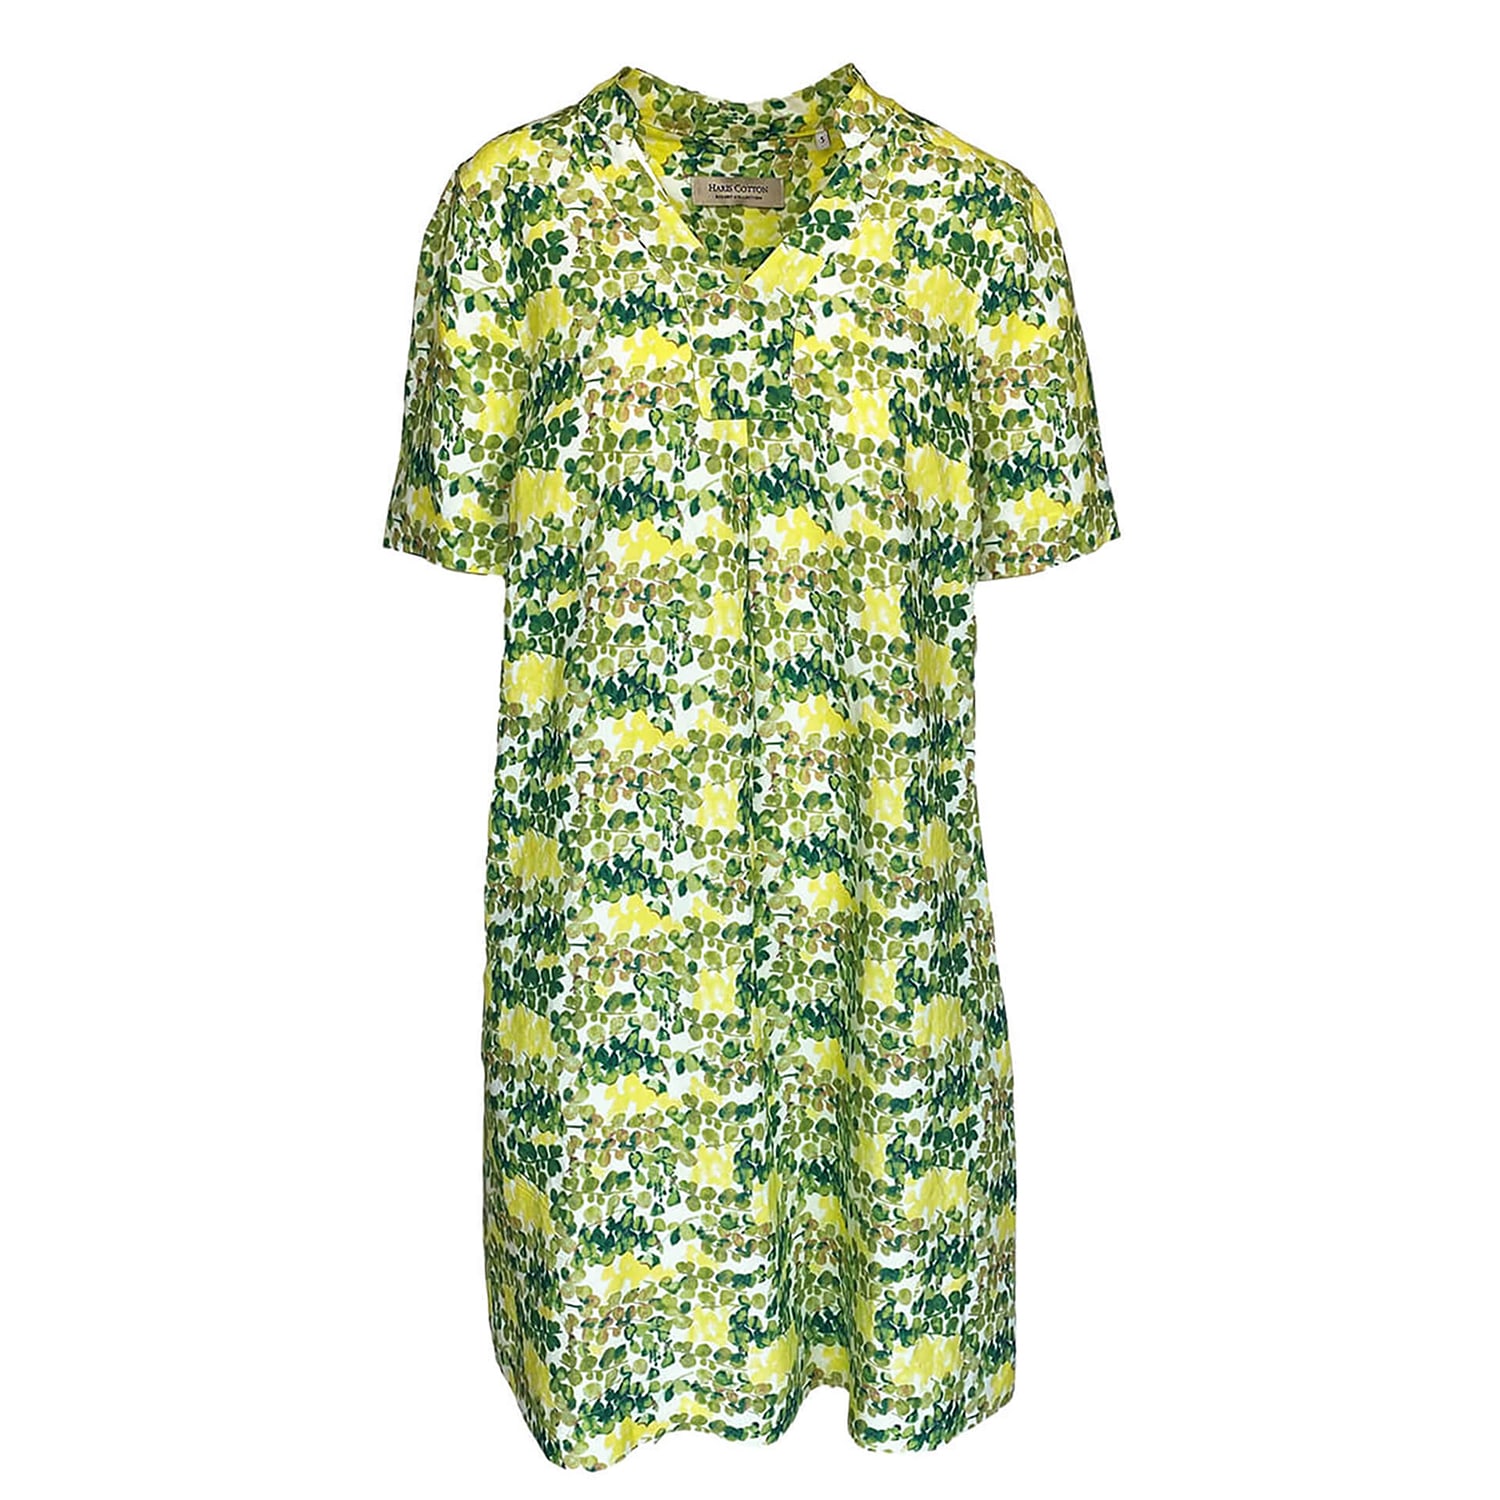 Haris Cotton Women's Knee Length Printed Linen Blend Dress With Notched Neckline - Petals Green